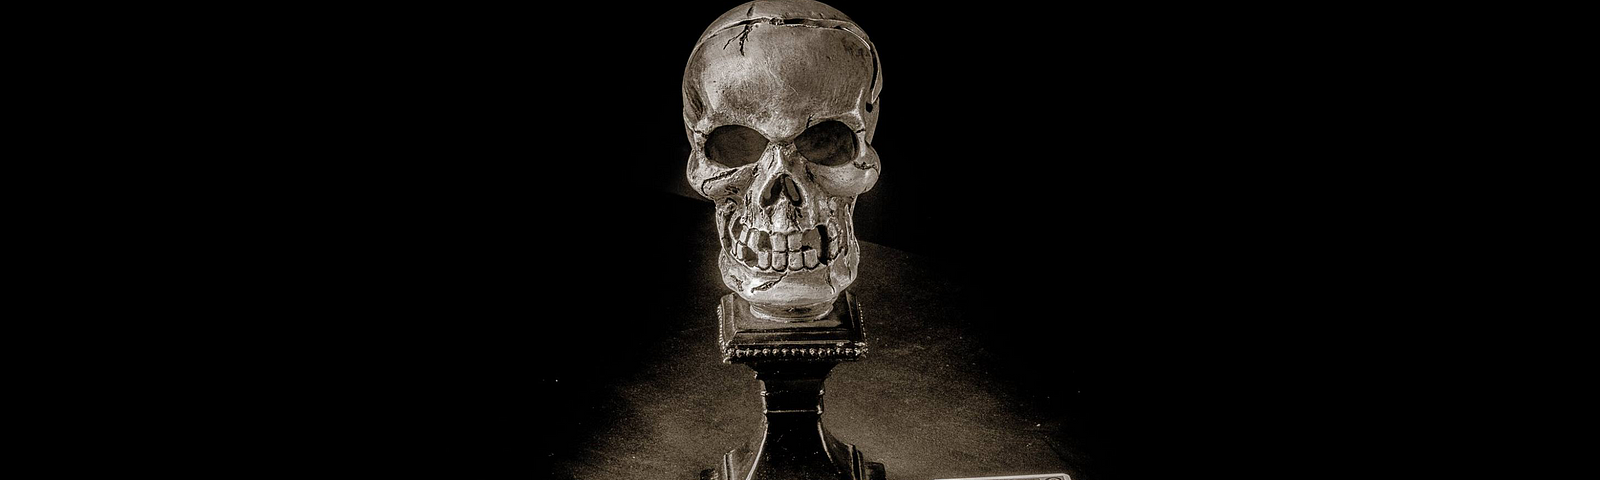 Skull with tarot cards